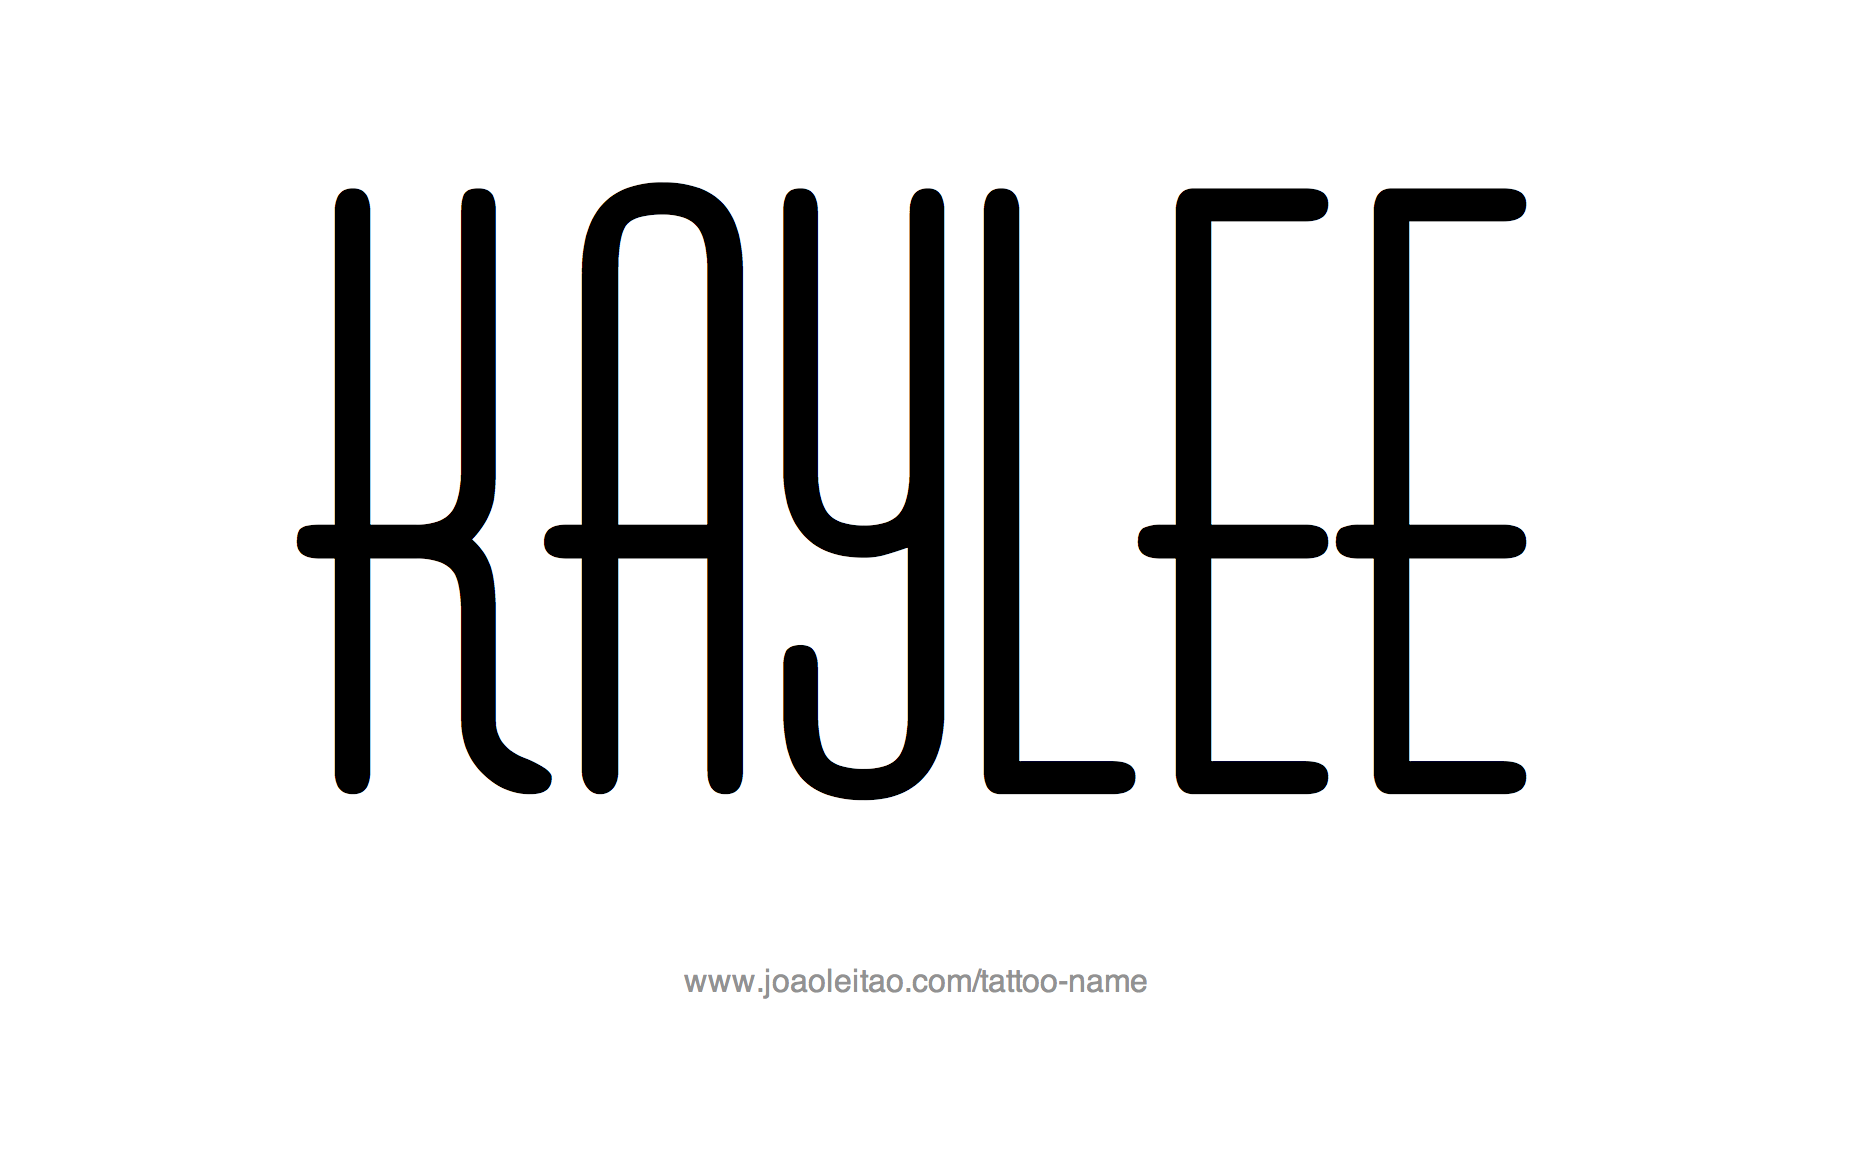 Tattoo Design Name Kaylee 